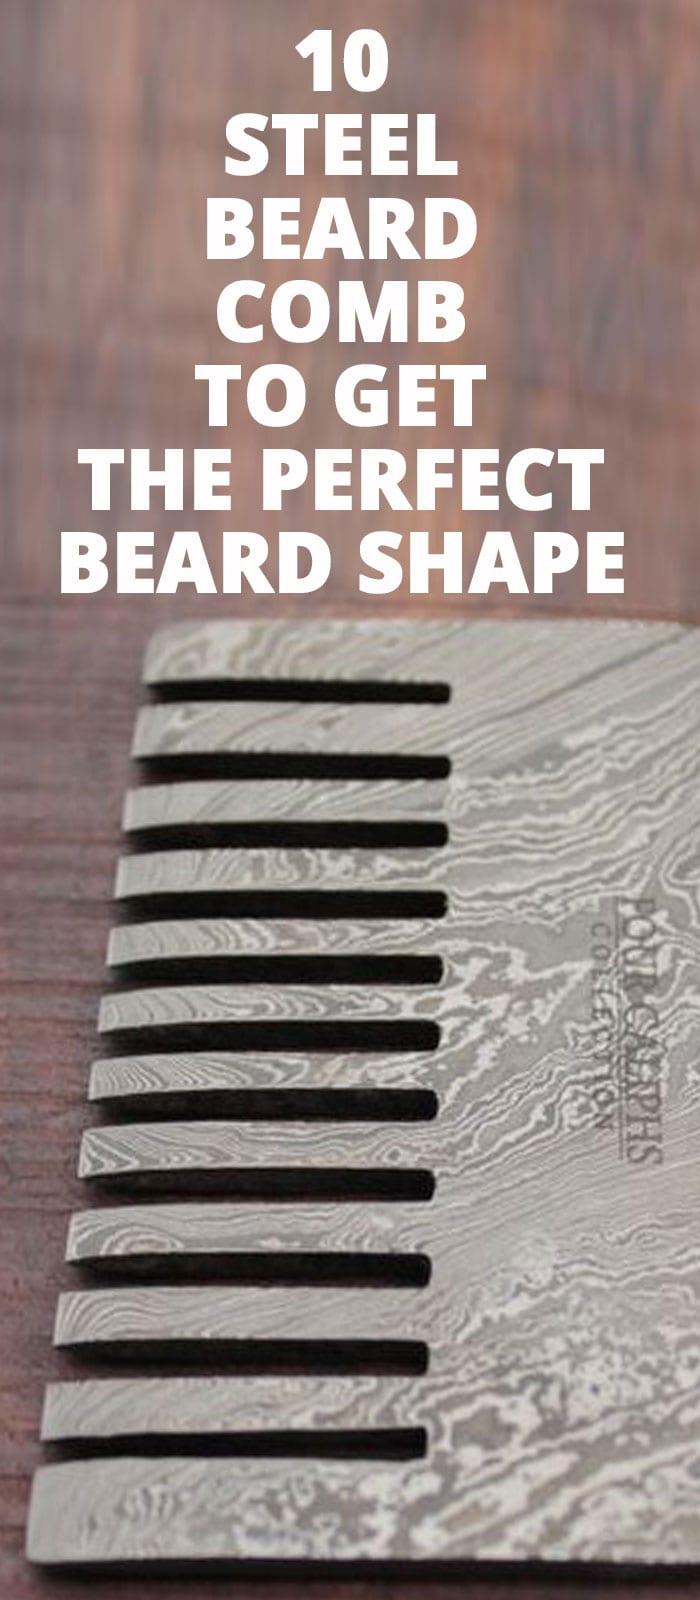 10 STEEL BEARD COMBS TO GET THE PERFECT BEARD SHAPE